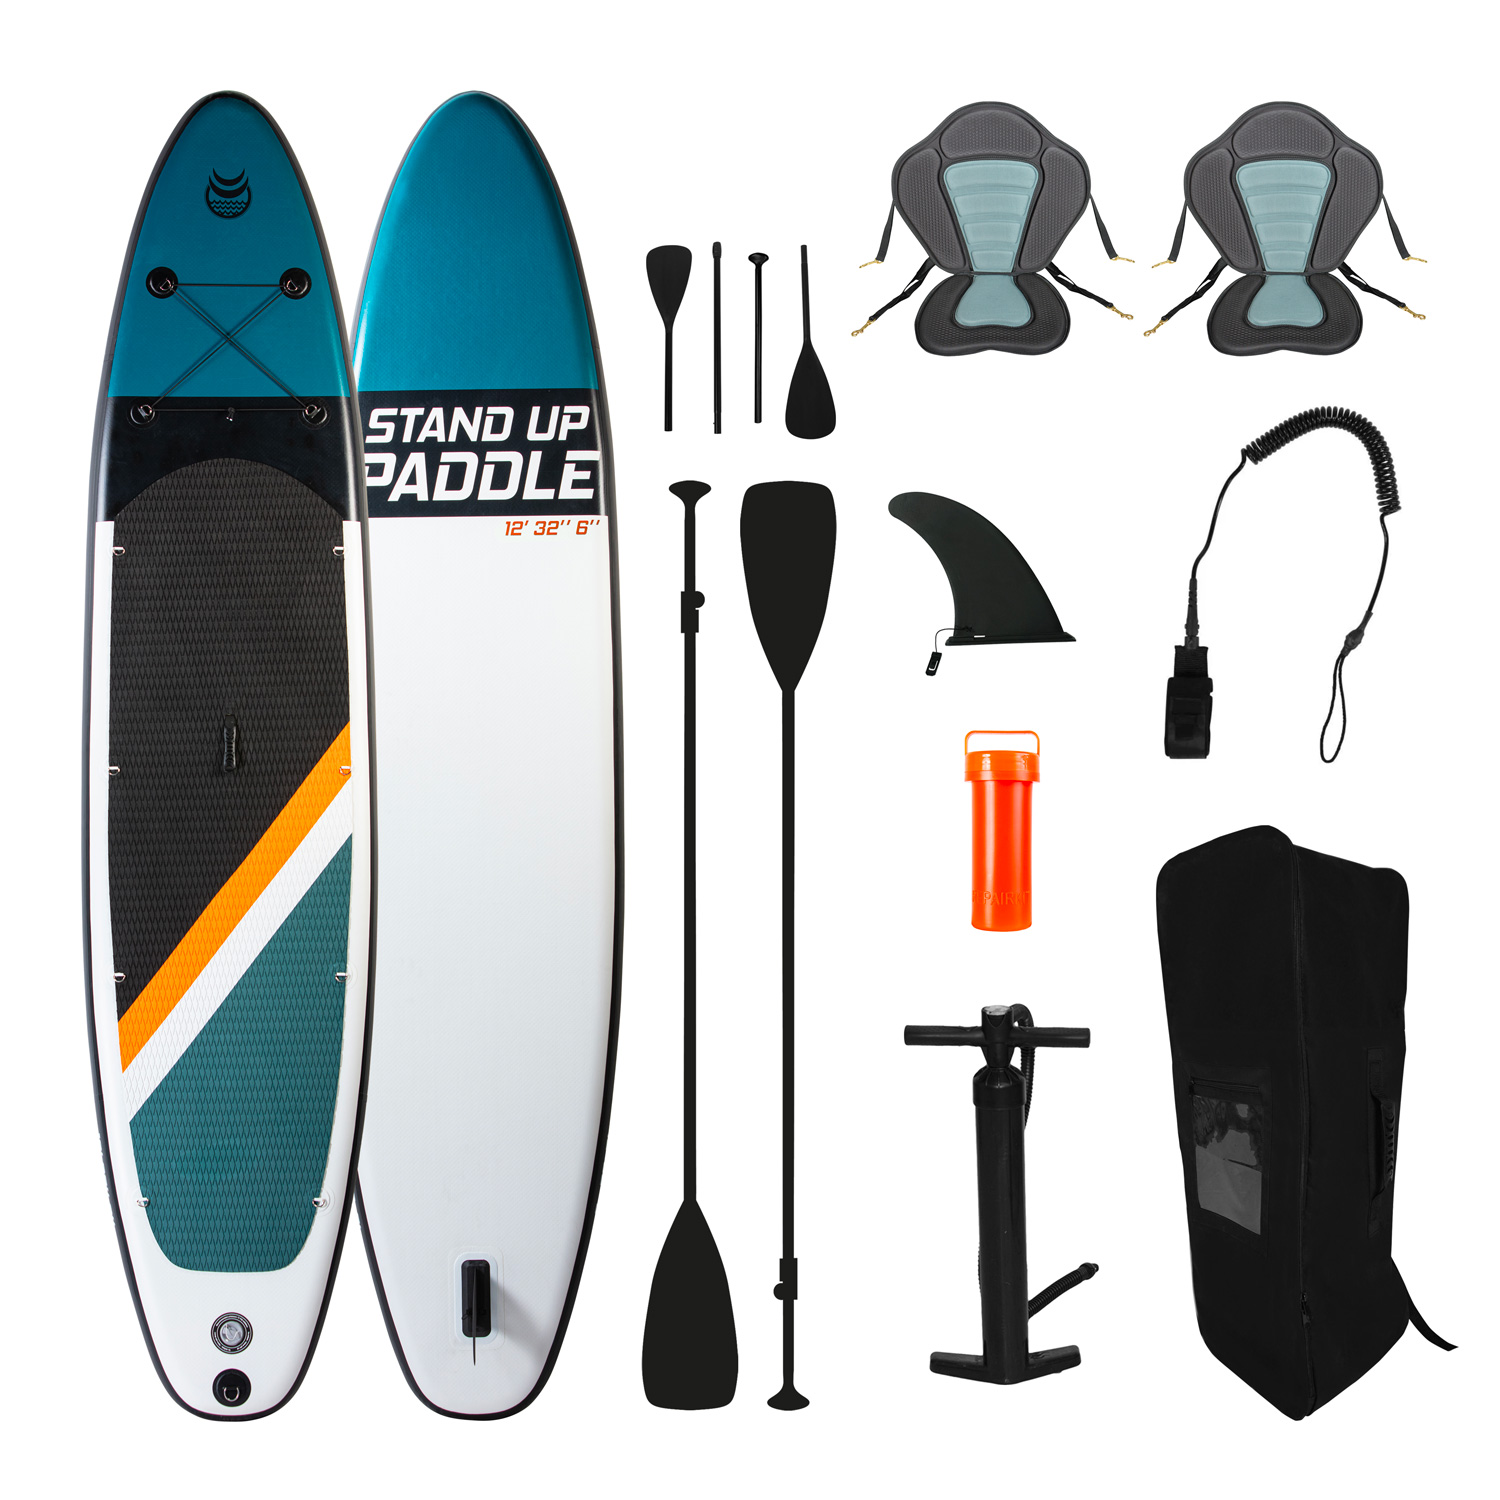 Tabla Paddle Surf Hinchable Adrn Two 12' Con Inflador, Remo, Leash Y Mochila  MKP